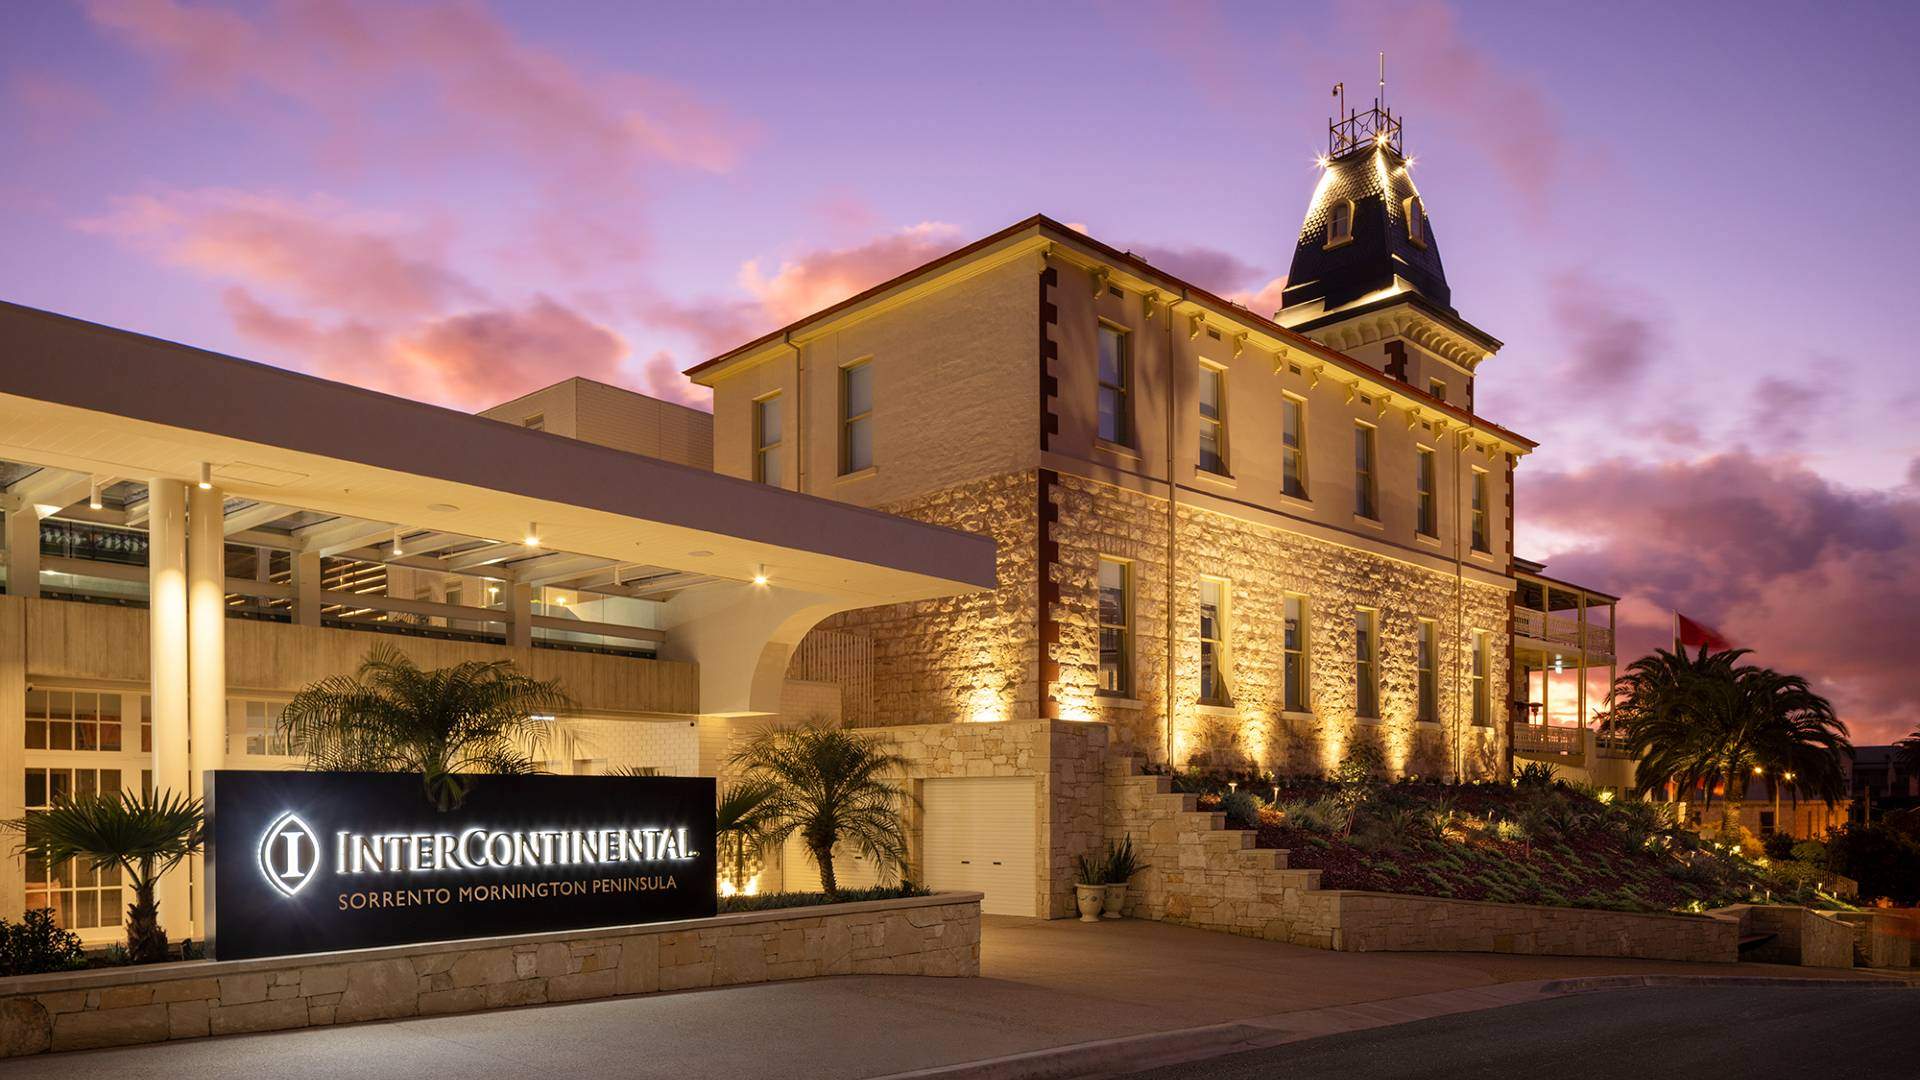 Now Open: The Mornington Peninsula Has Scored a Luxe New Seaside InterContinental Hotel